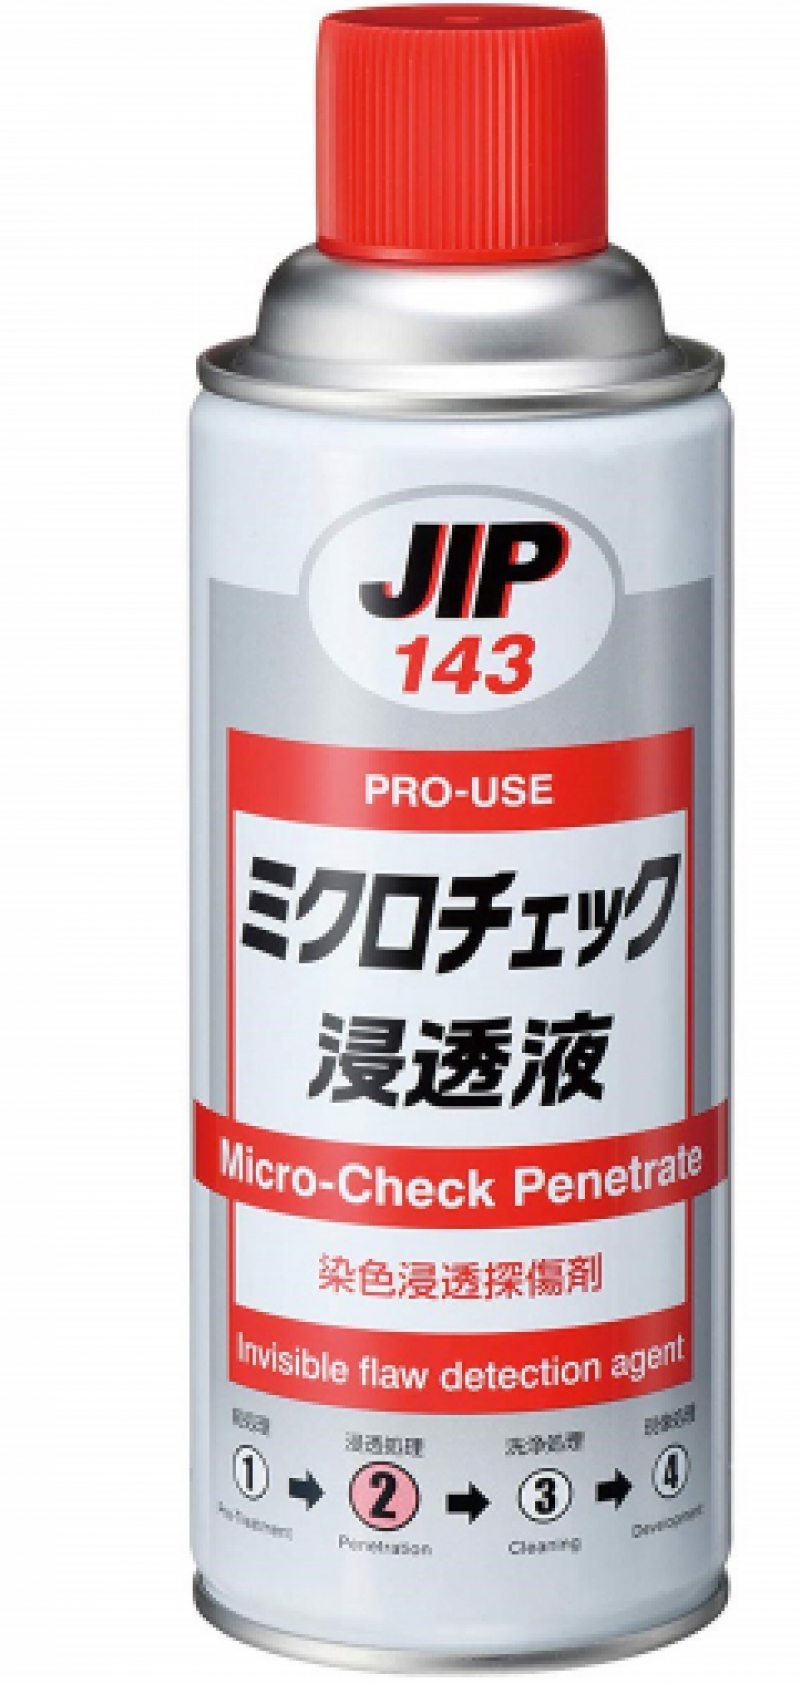 JIP143 นํ้ายาตรวจสอบรอยร้าวละเอียดสูงที่สุด น้ำยาเร่งปฏิกริยา เช็ครอยร้าว ความแม่นยำ Micro Check Penetration